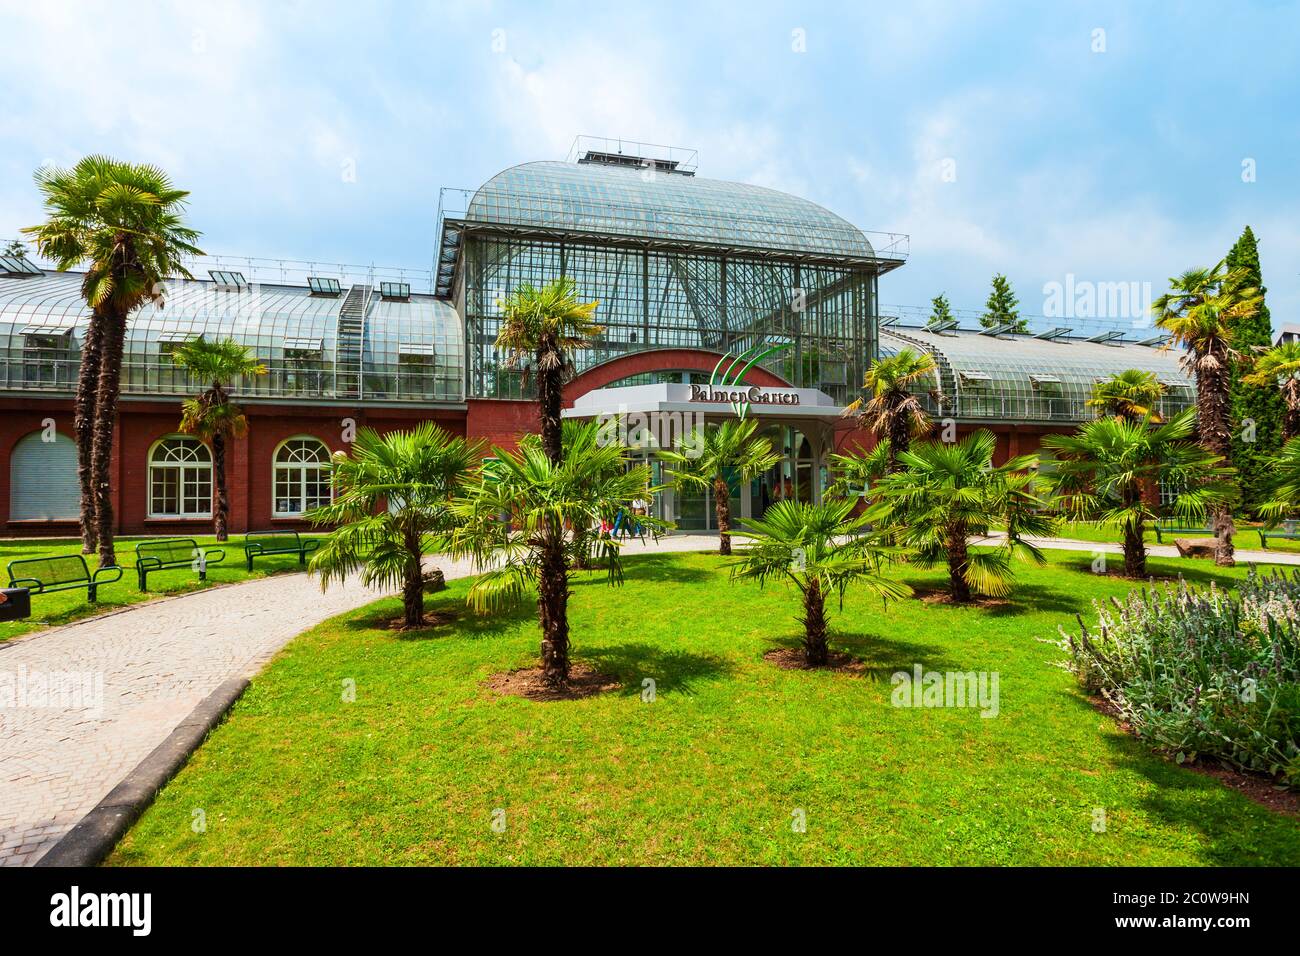 FRANKFURT AM MAIN, GERMANY - JUNE 24, 2018: The Palmengarten botanical garden in Frankfurt am Main, Germany Stock Photo